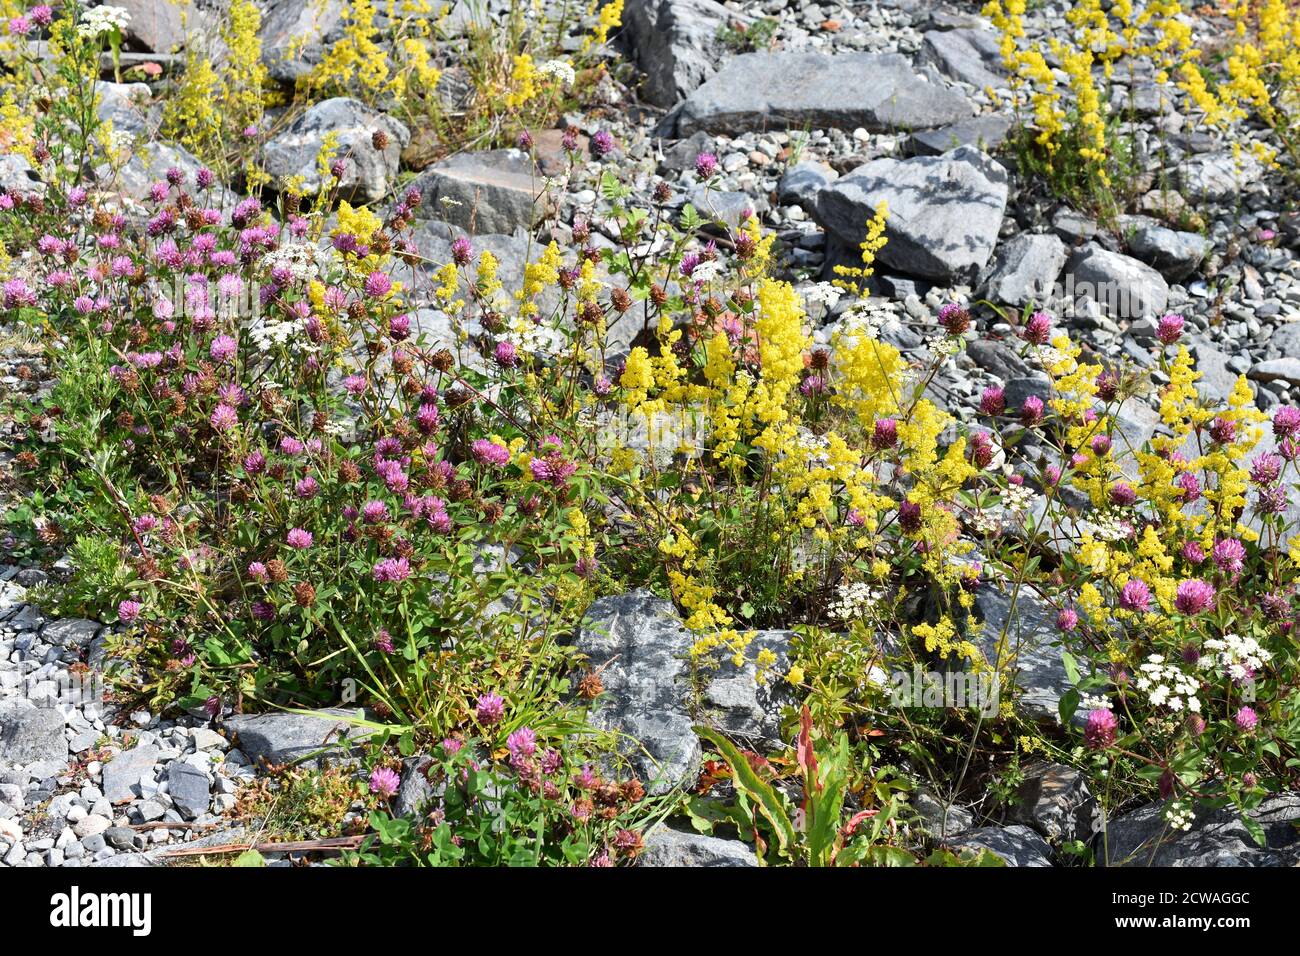 Yellow bedstraw Galium verum and red clover Trifolium pratense flowering in a wildflower field in rocky landscape Stock Photo